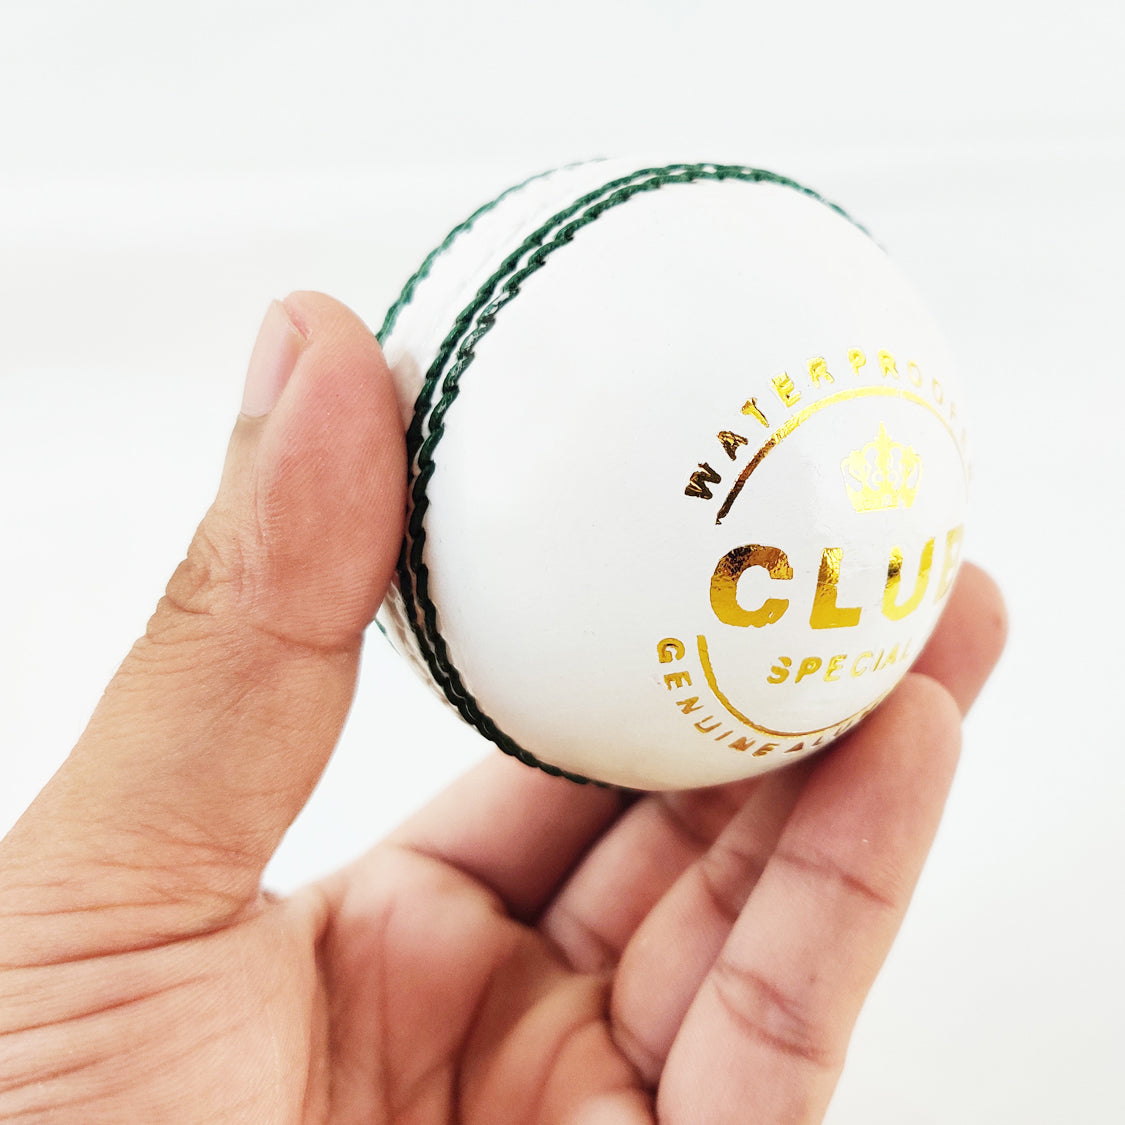 Prokick Club Four Piece Leather Cricket Ball, 12 Pc (White) - Best Price online Prokicksports.com